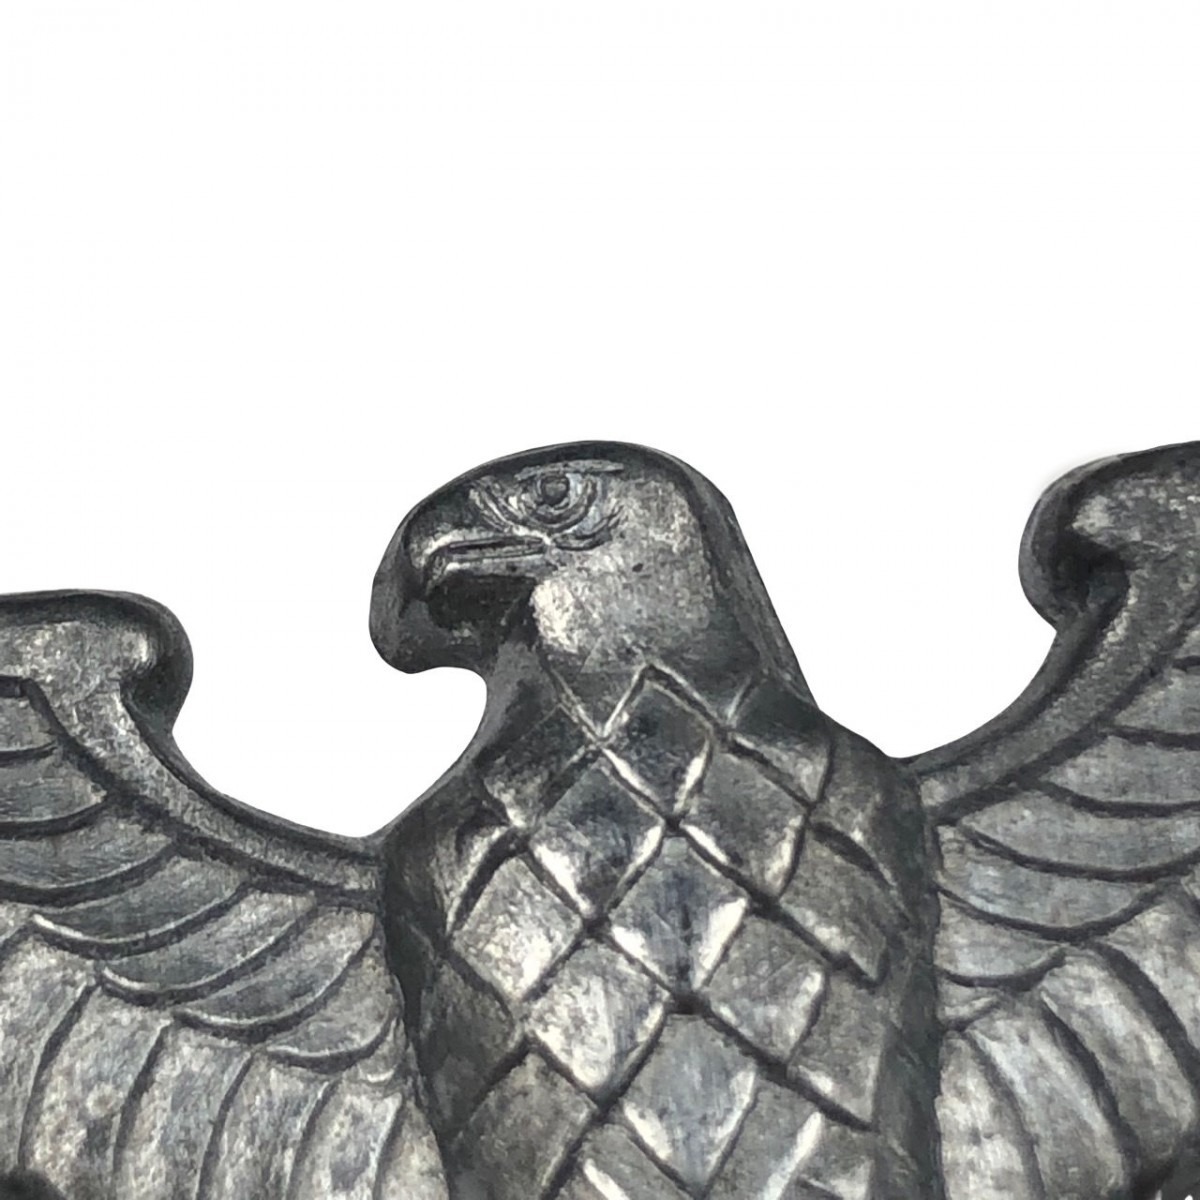 Original WWII NSDAP visor cap eagle - Oorlogsspullen.nl - Militaria shop